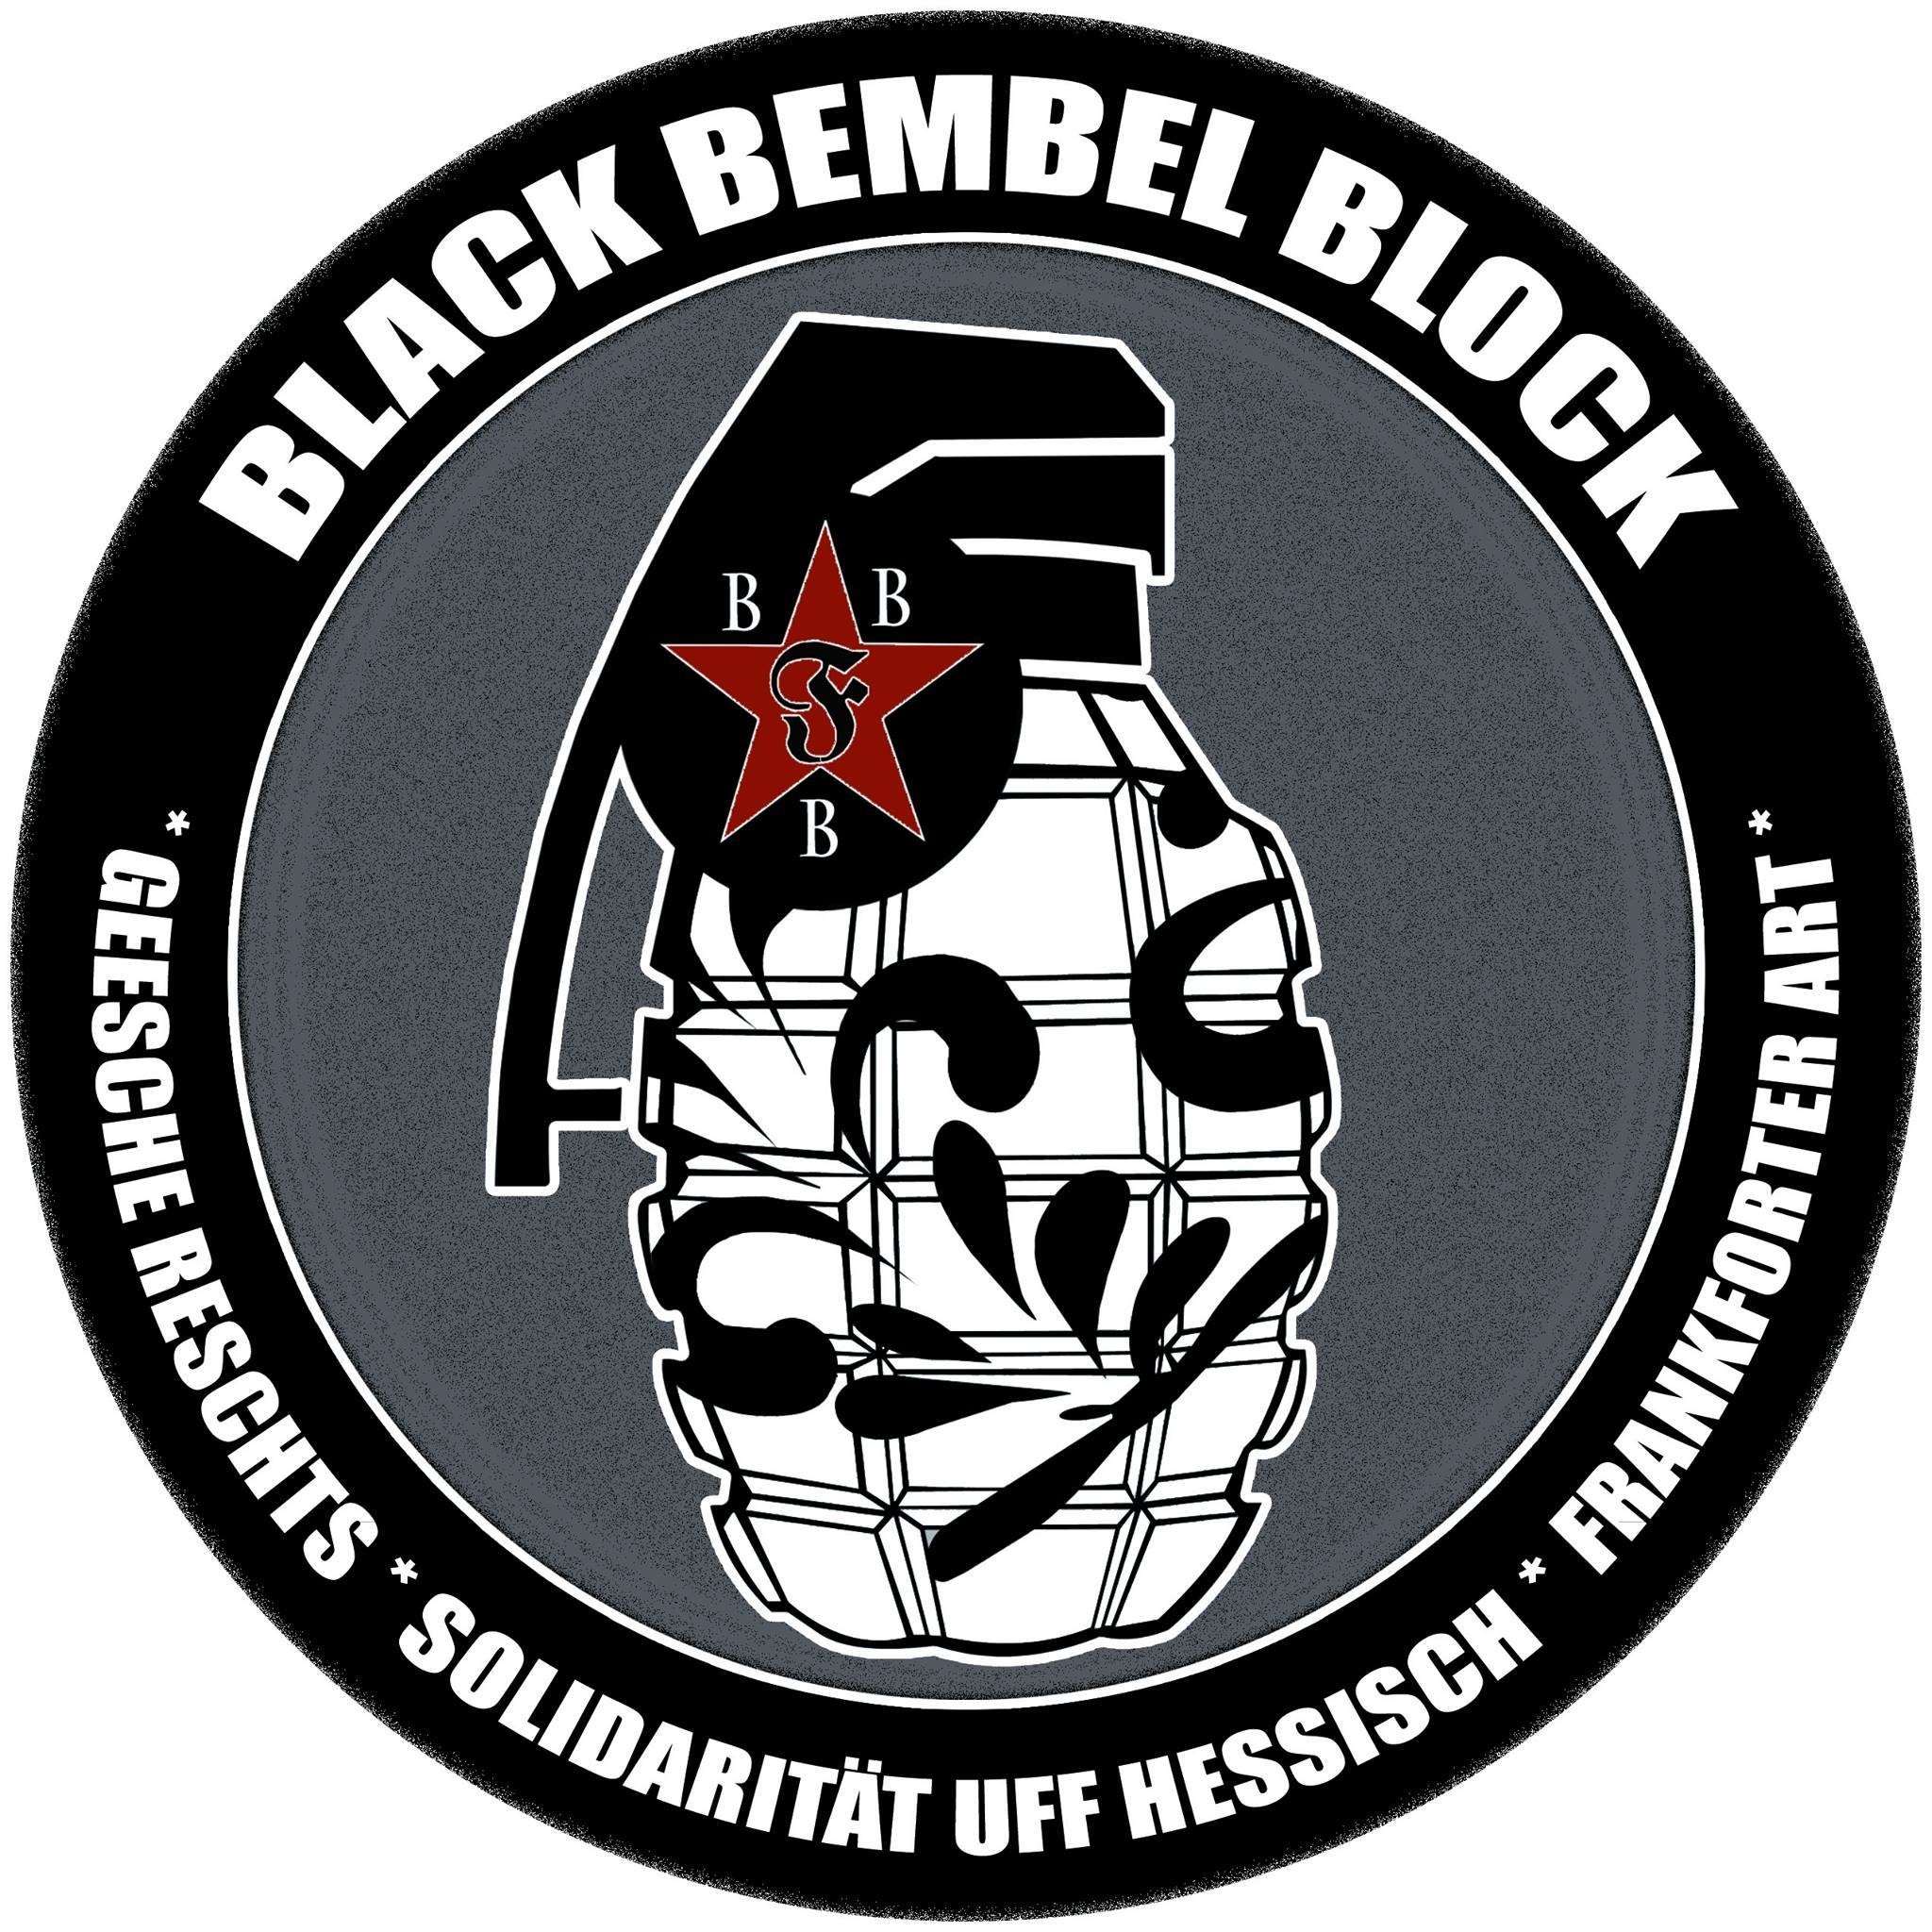 Black Bembel Block